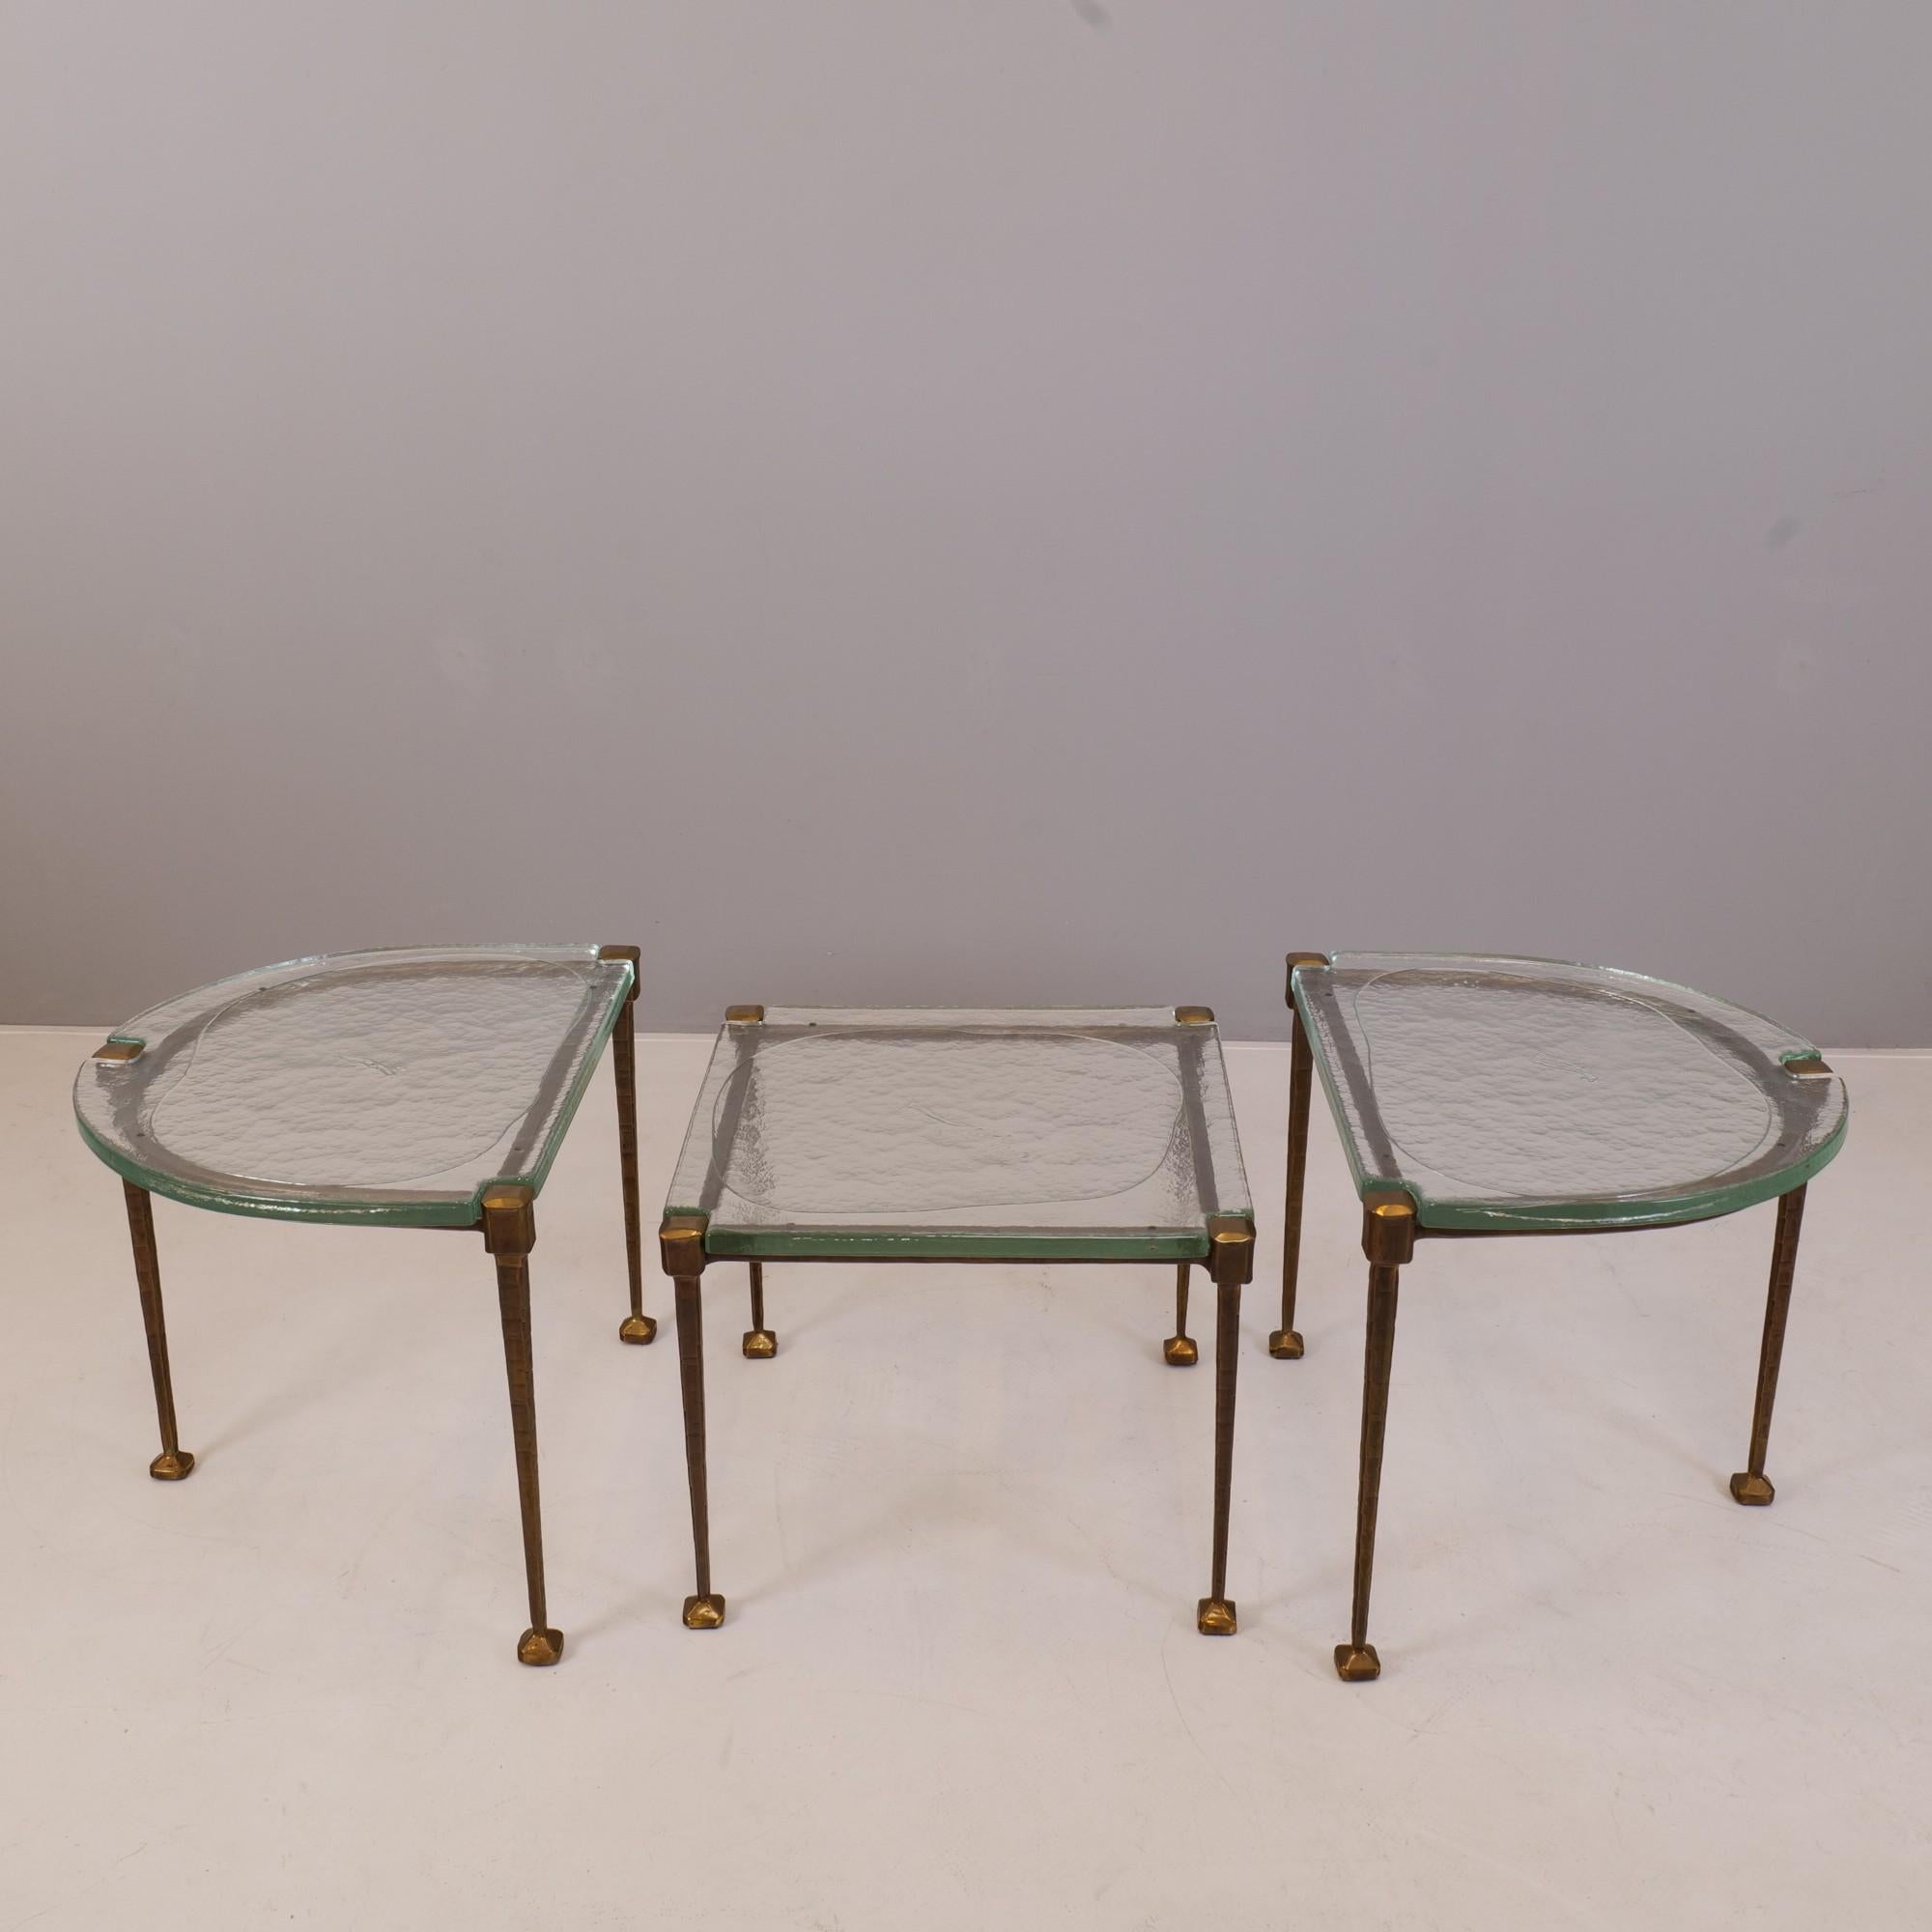 Brutalist vintage set of 3 german cast bronzed tables in style of Lothar Klute 1980's